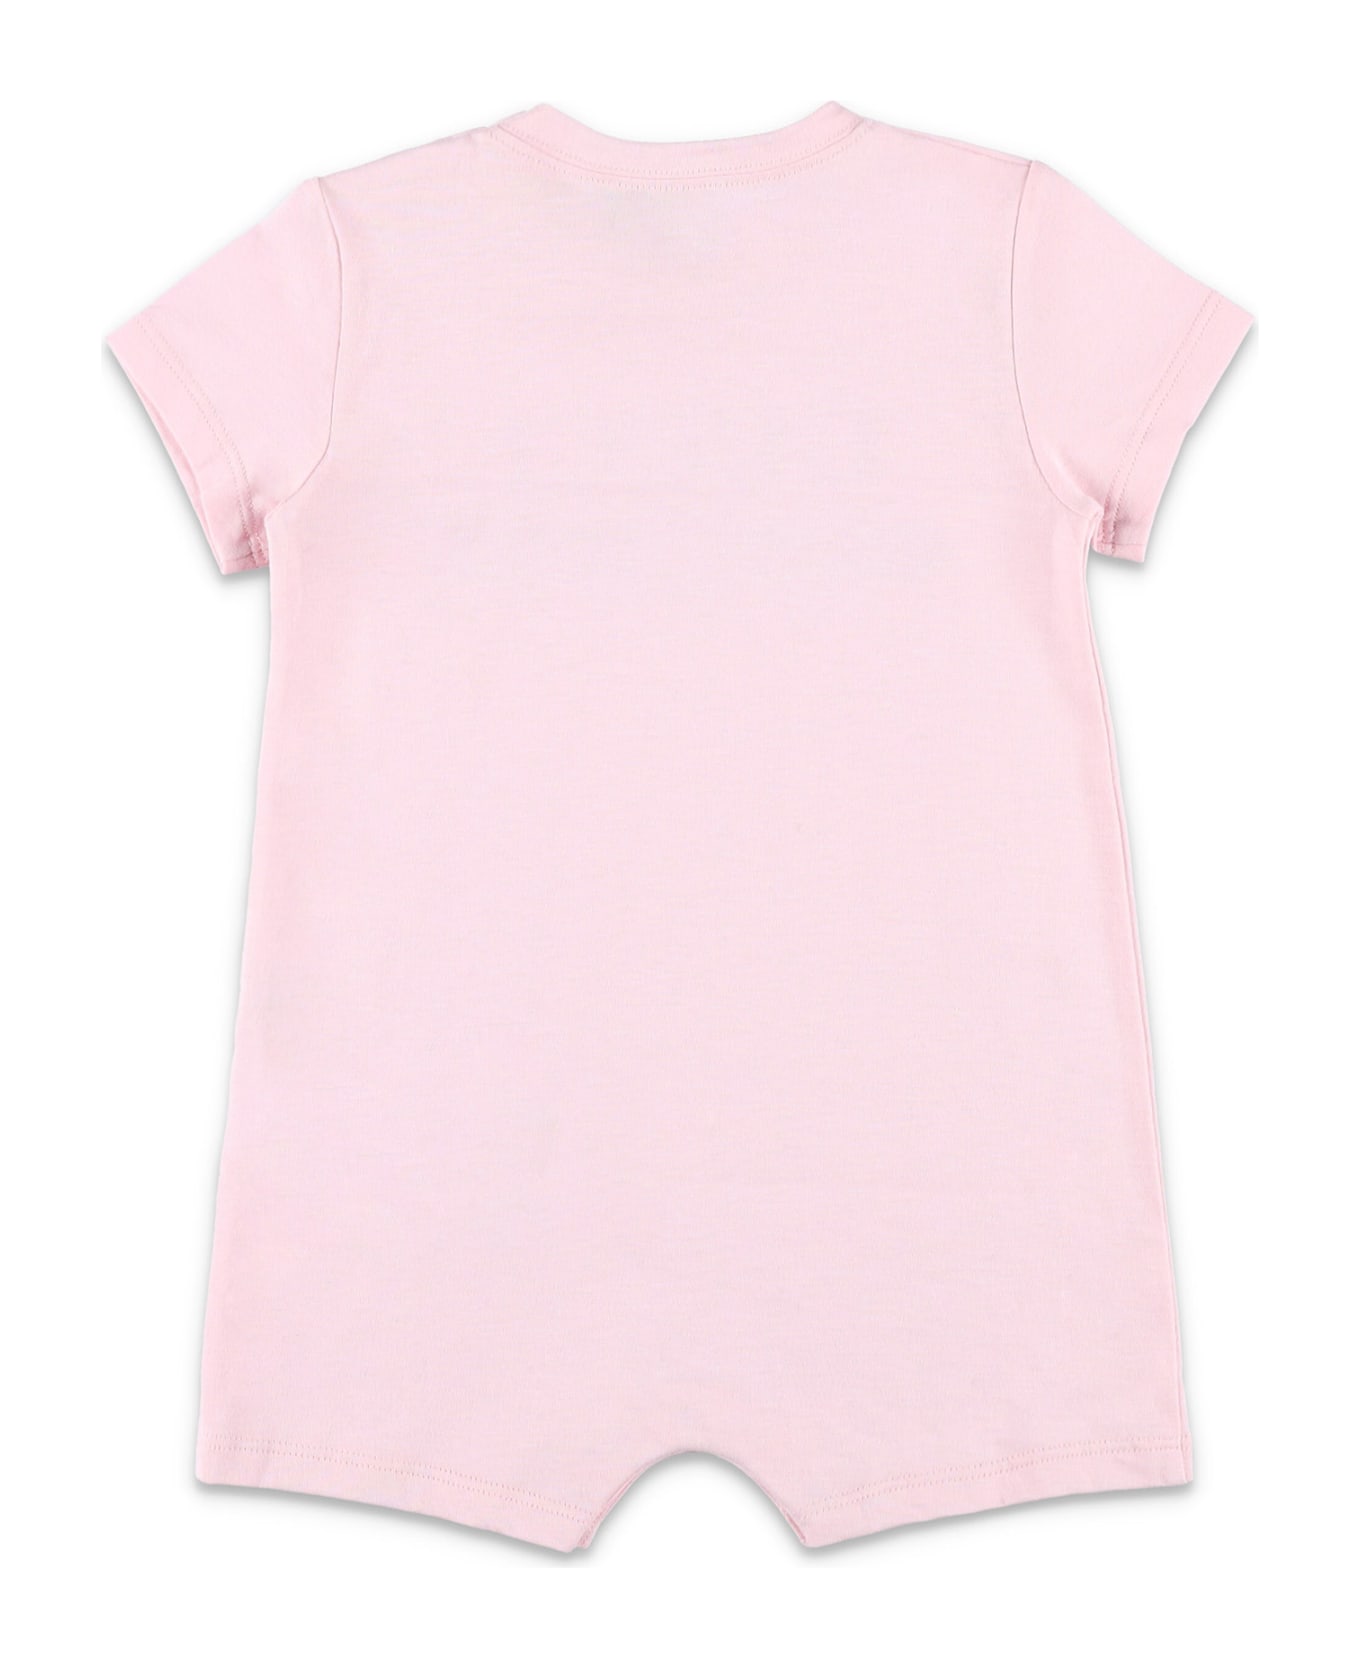 Gucci Logo Cotton Gift Set - Pink